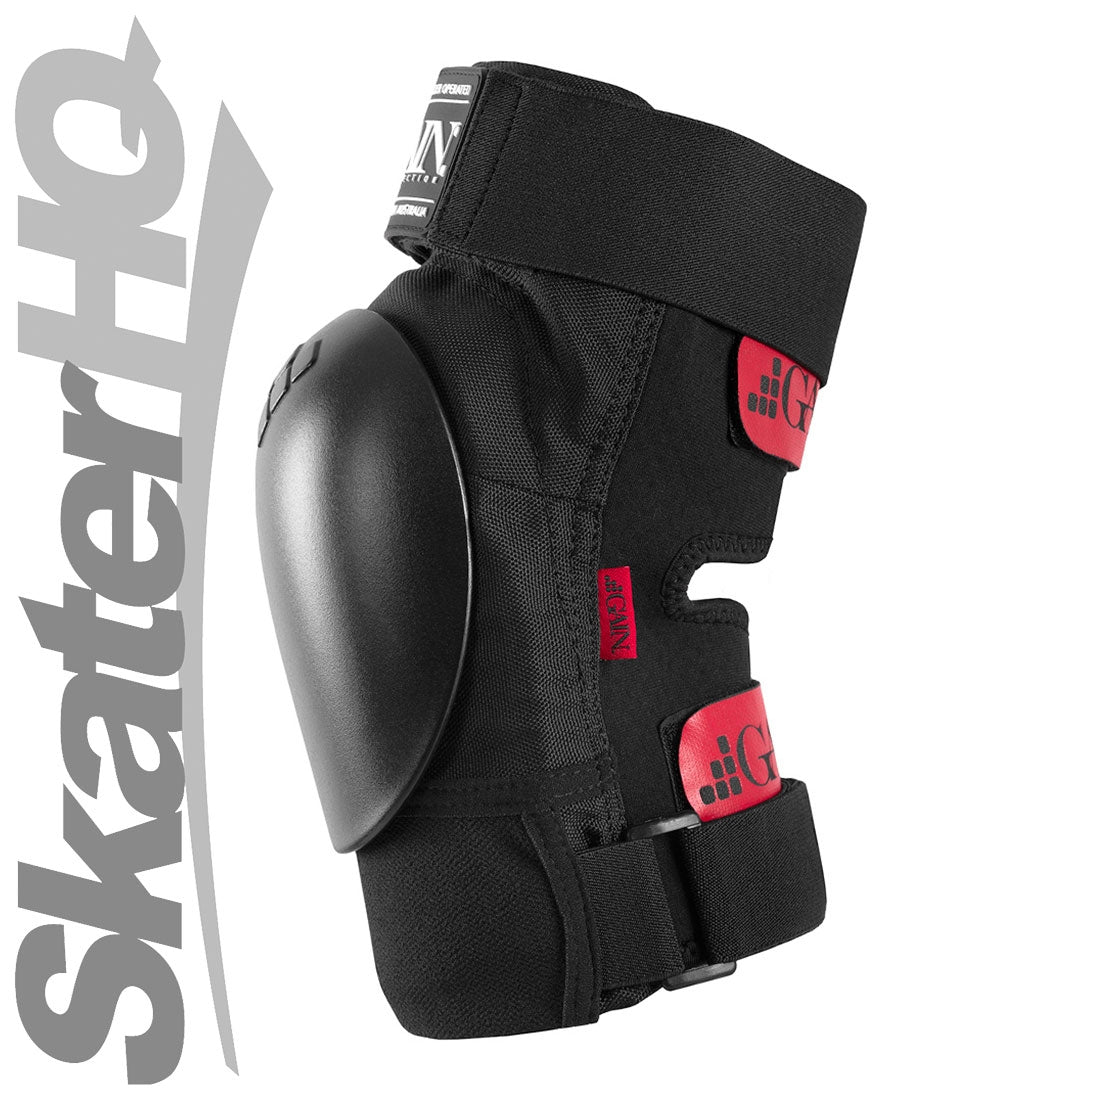 GAIN Shield Knee Pads - Black - XS/Junior Protective Gear